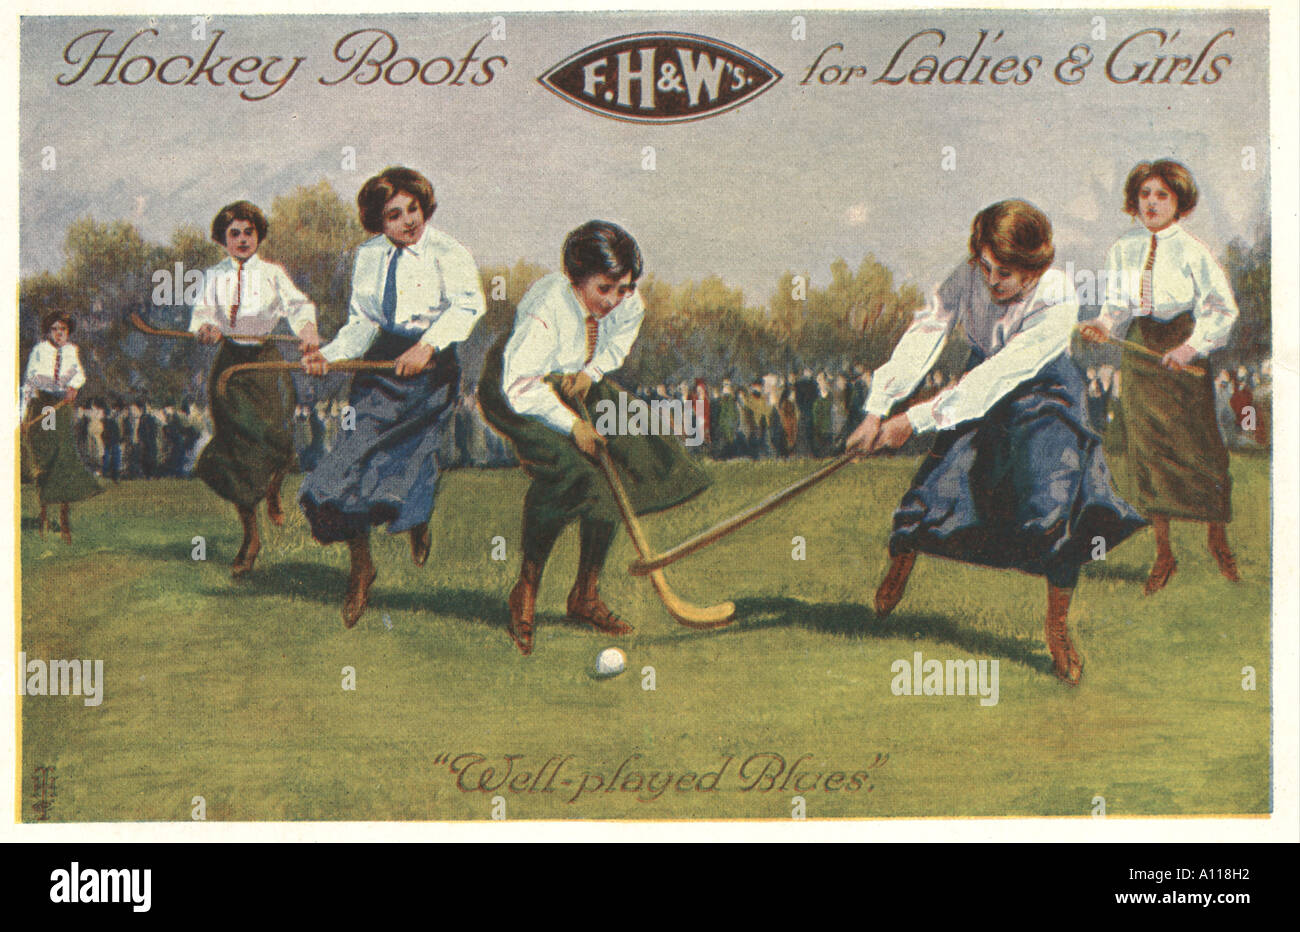 Hockey Boots for Ladies & Girls, Freeman, Hardy & Willis advertisement circa 1910 Stock Photo